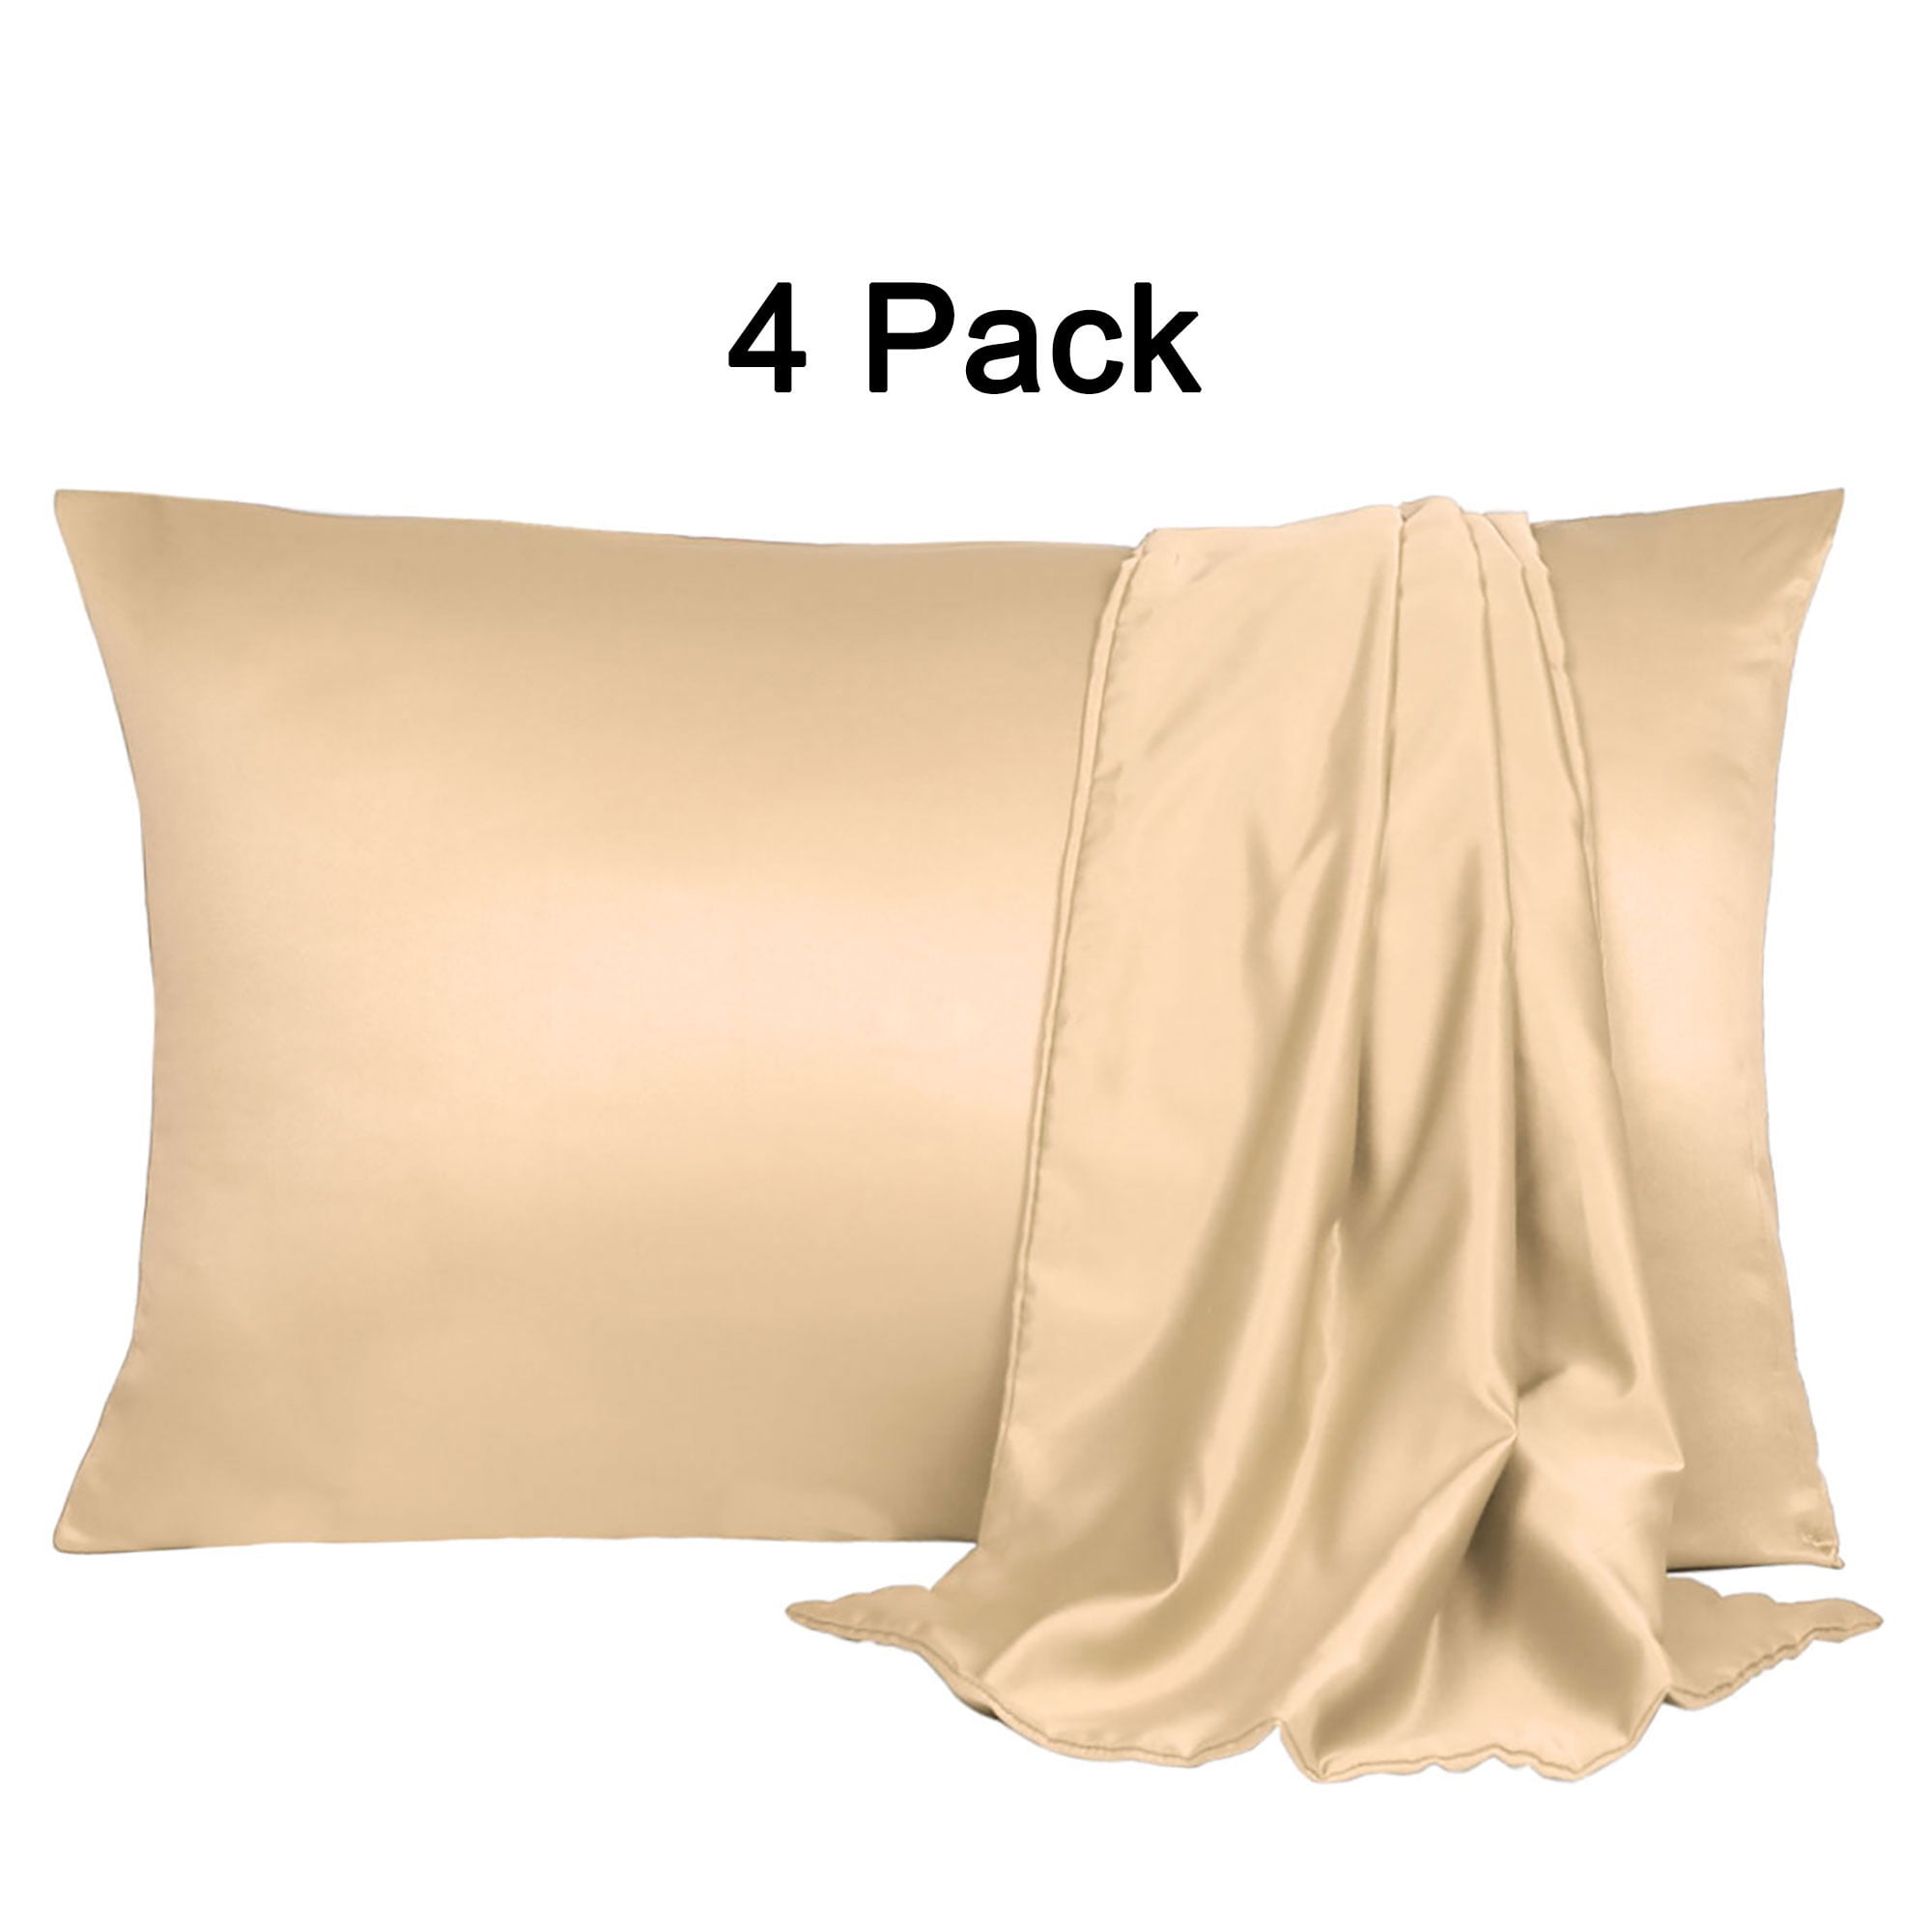 Details about   2Piece Satin Silk Pillowcase Pillow Case Cover King Queen Standard Cushion Cover 